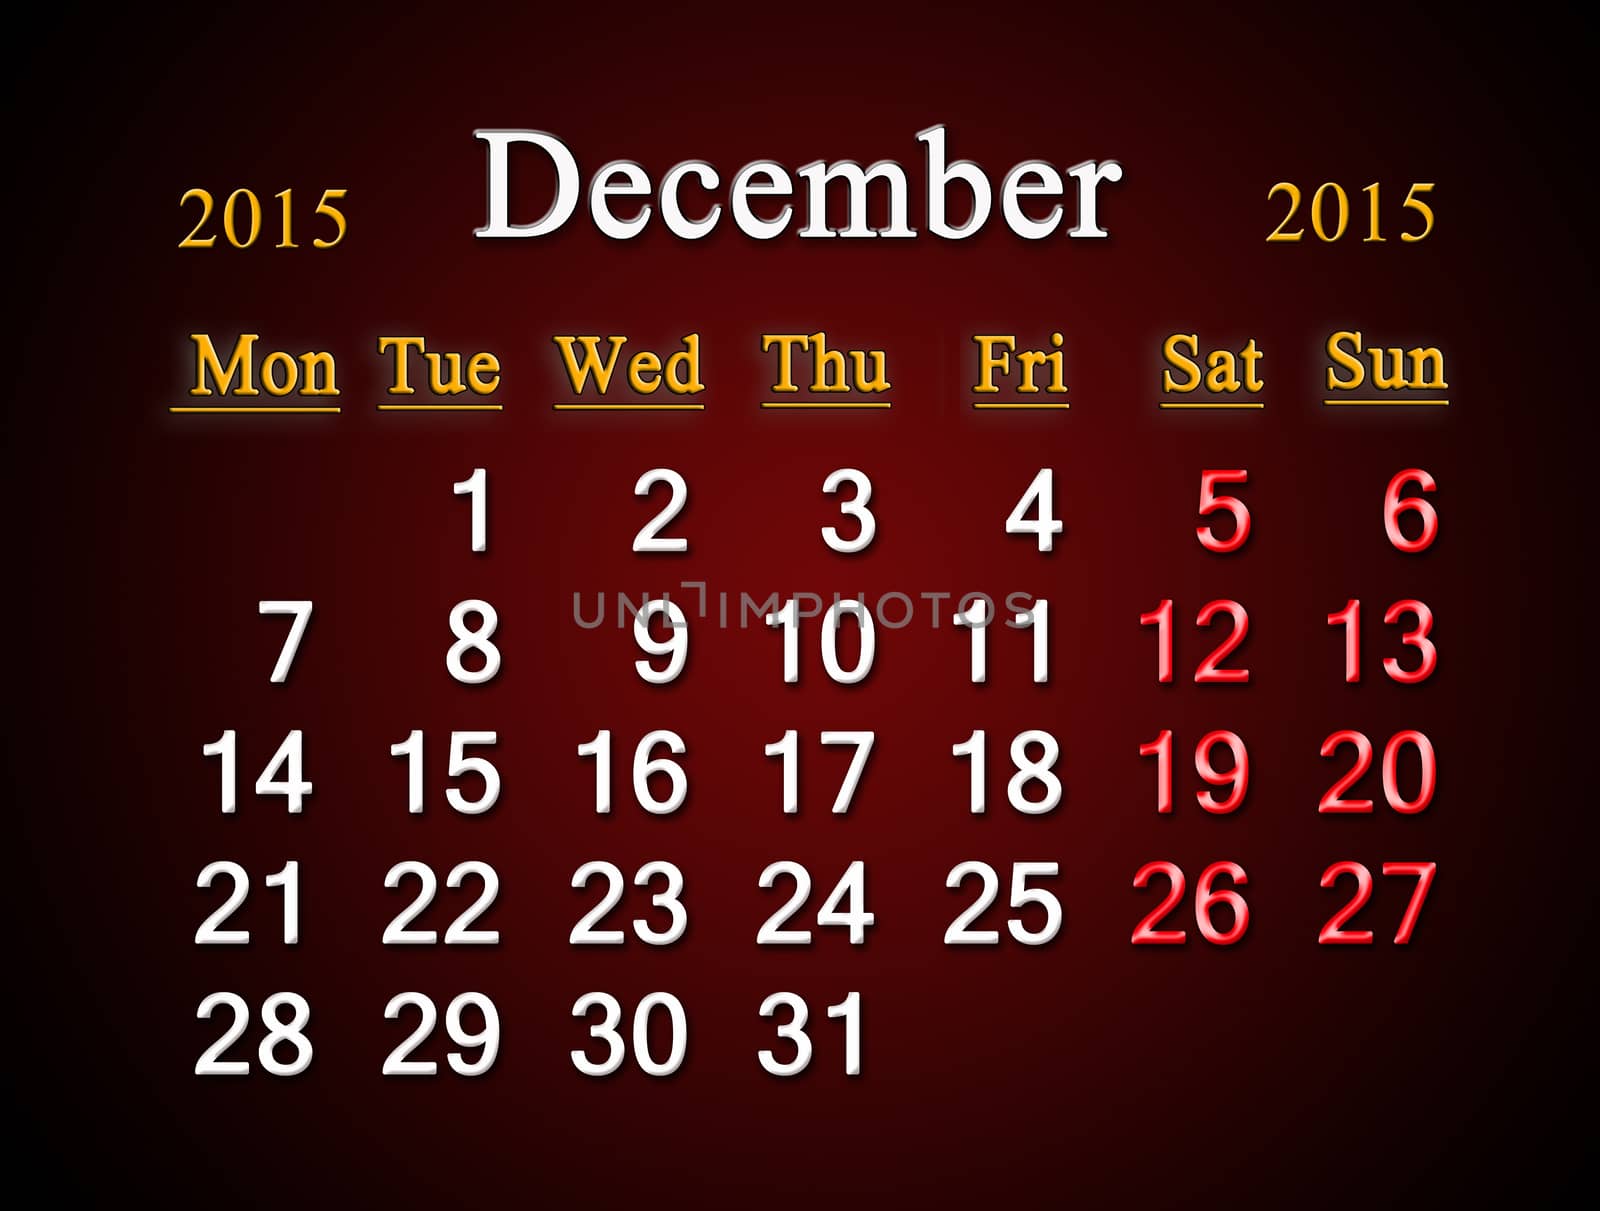 calendar on December of 2015 year on claret by alexmak